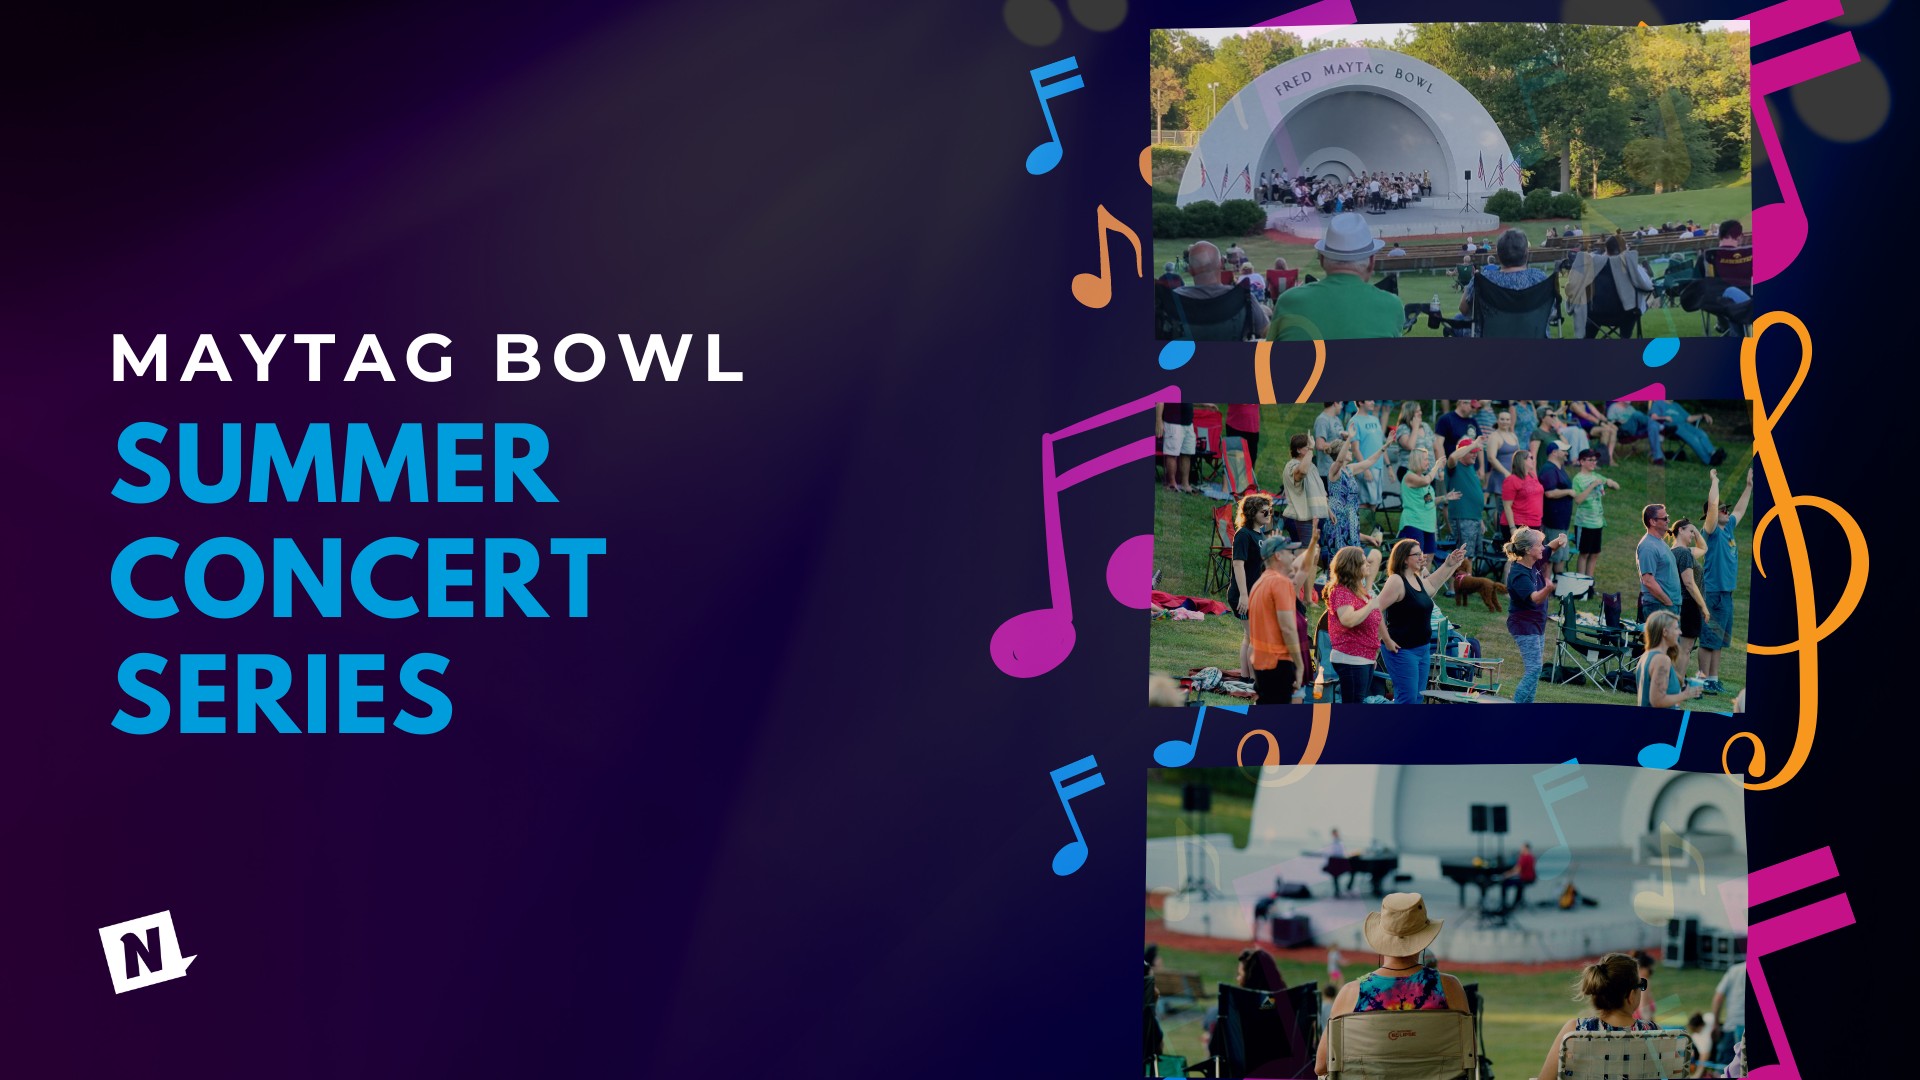 Maytag Bowl Summer Concert Series Photo